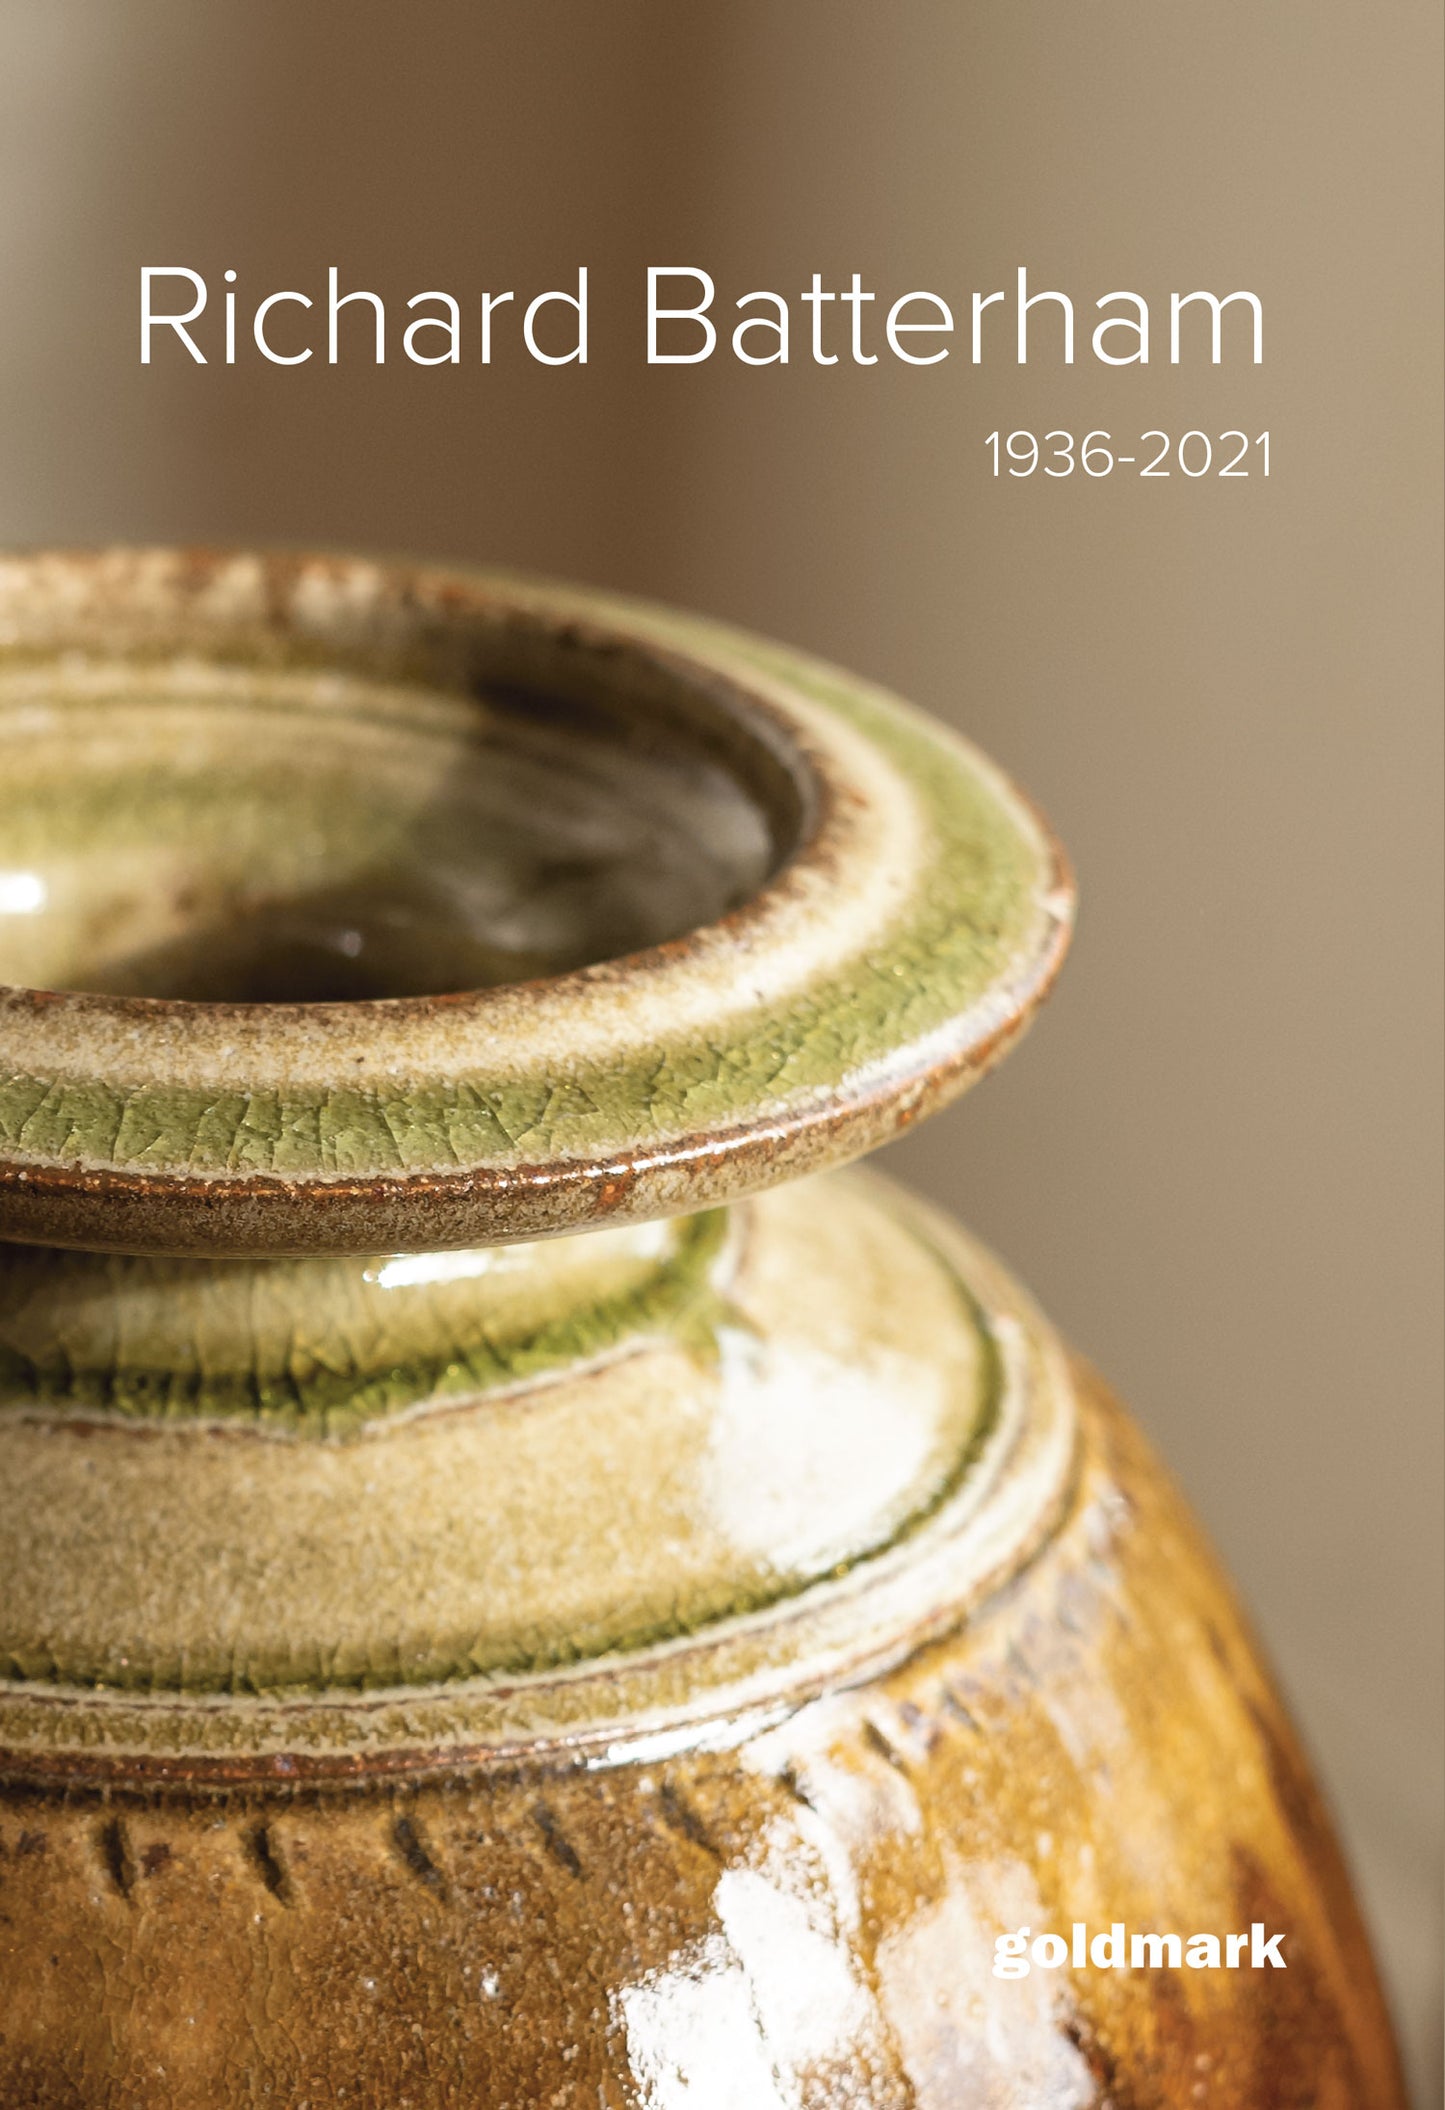 Richard Batterham - The Mike Dodd Collection